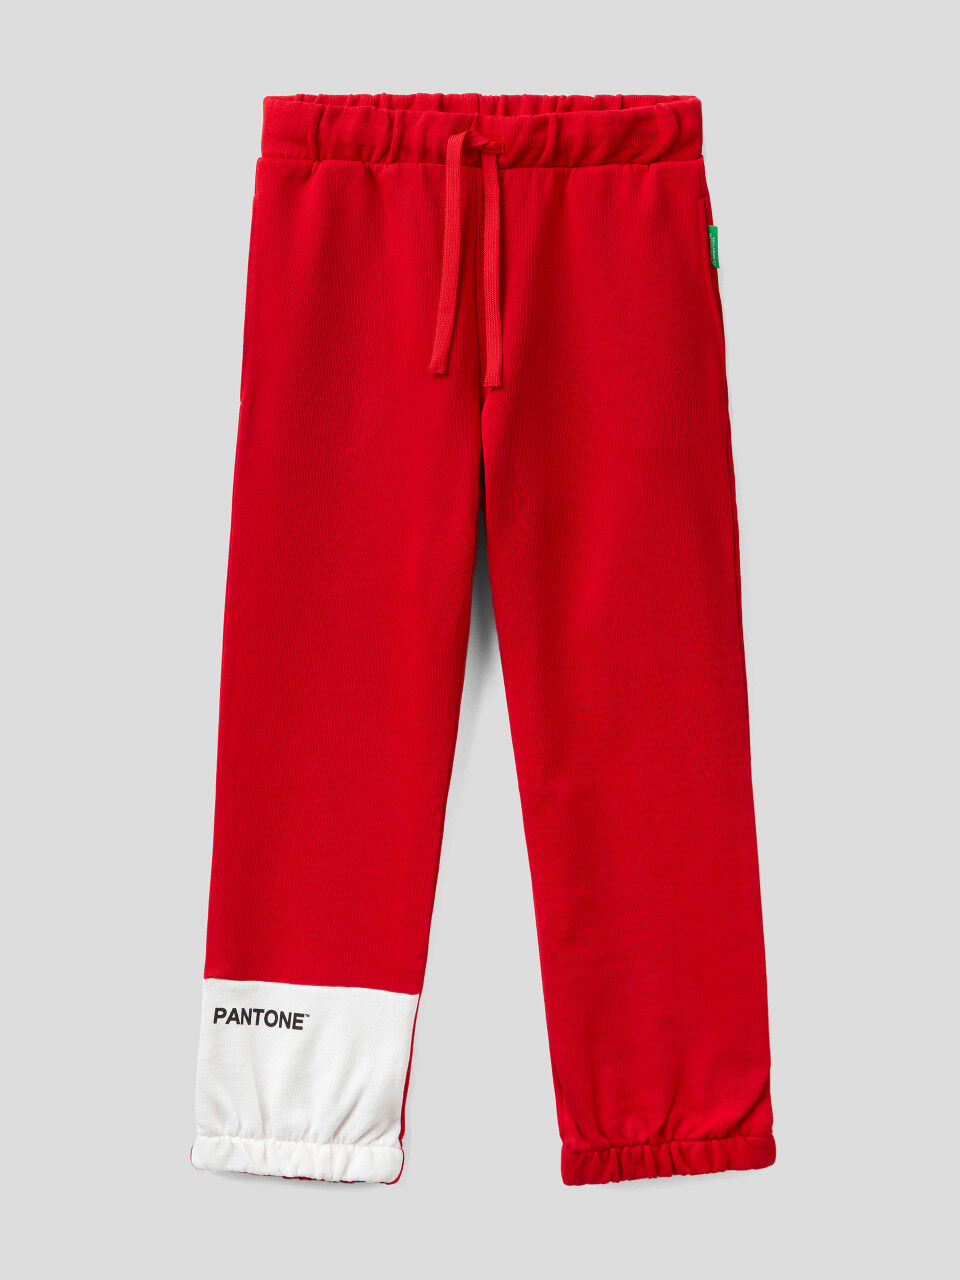 BenettonxPantone™ red sweatpants